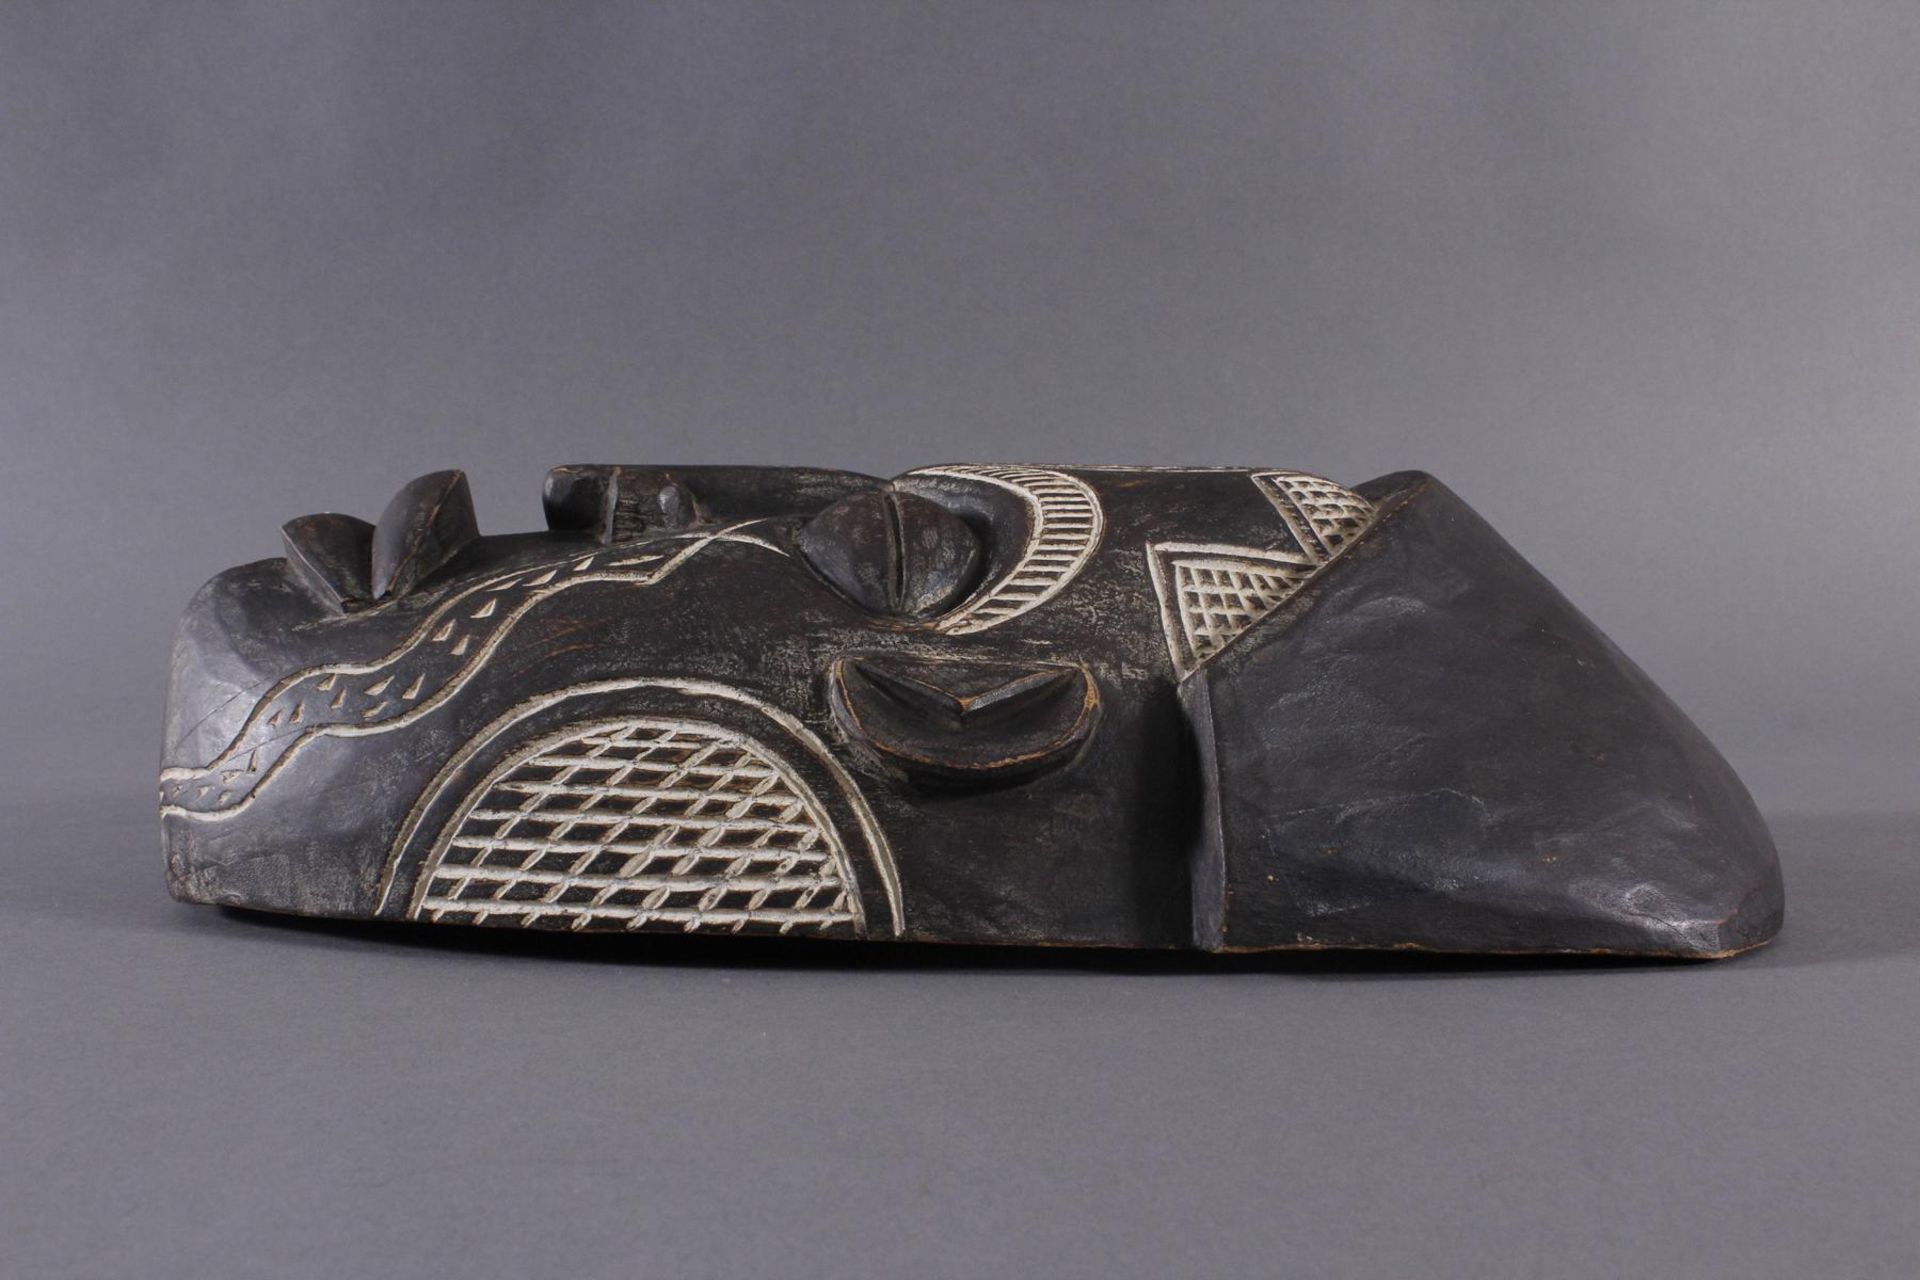 Antike Maske, Chokwe, Angola 1. Hälfte 20. Jh.Holz geschnitzt, dunkle Patina, Narbentatauierung, ca. - Bild 5 aus 7